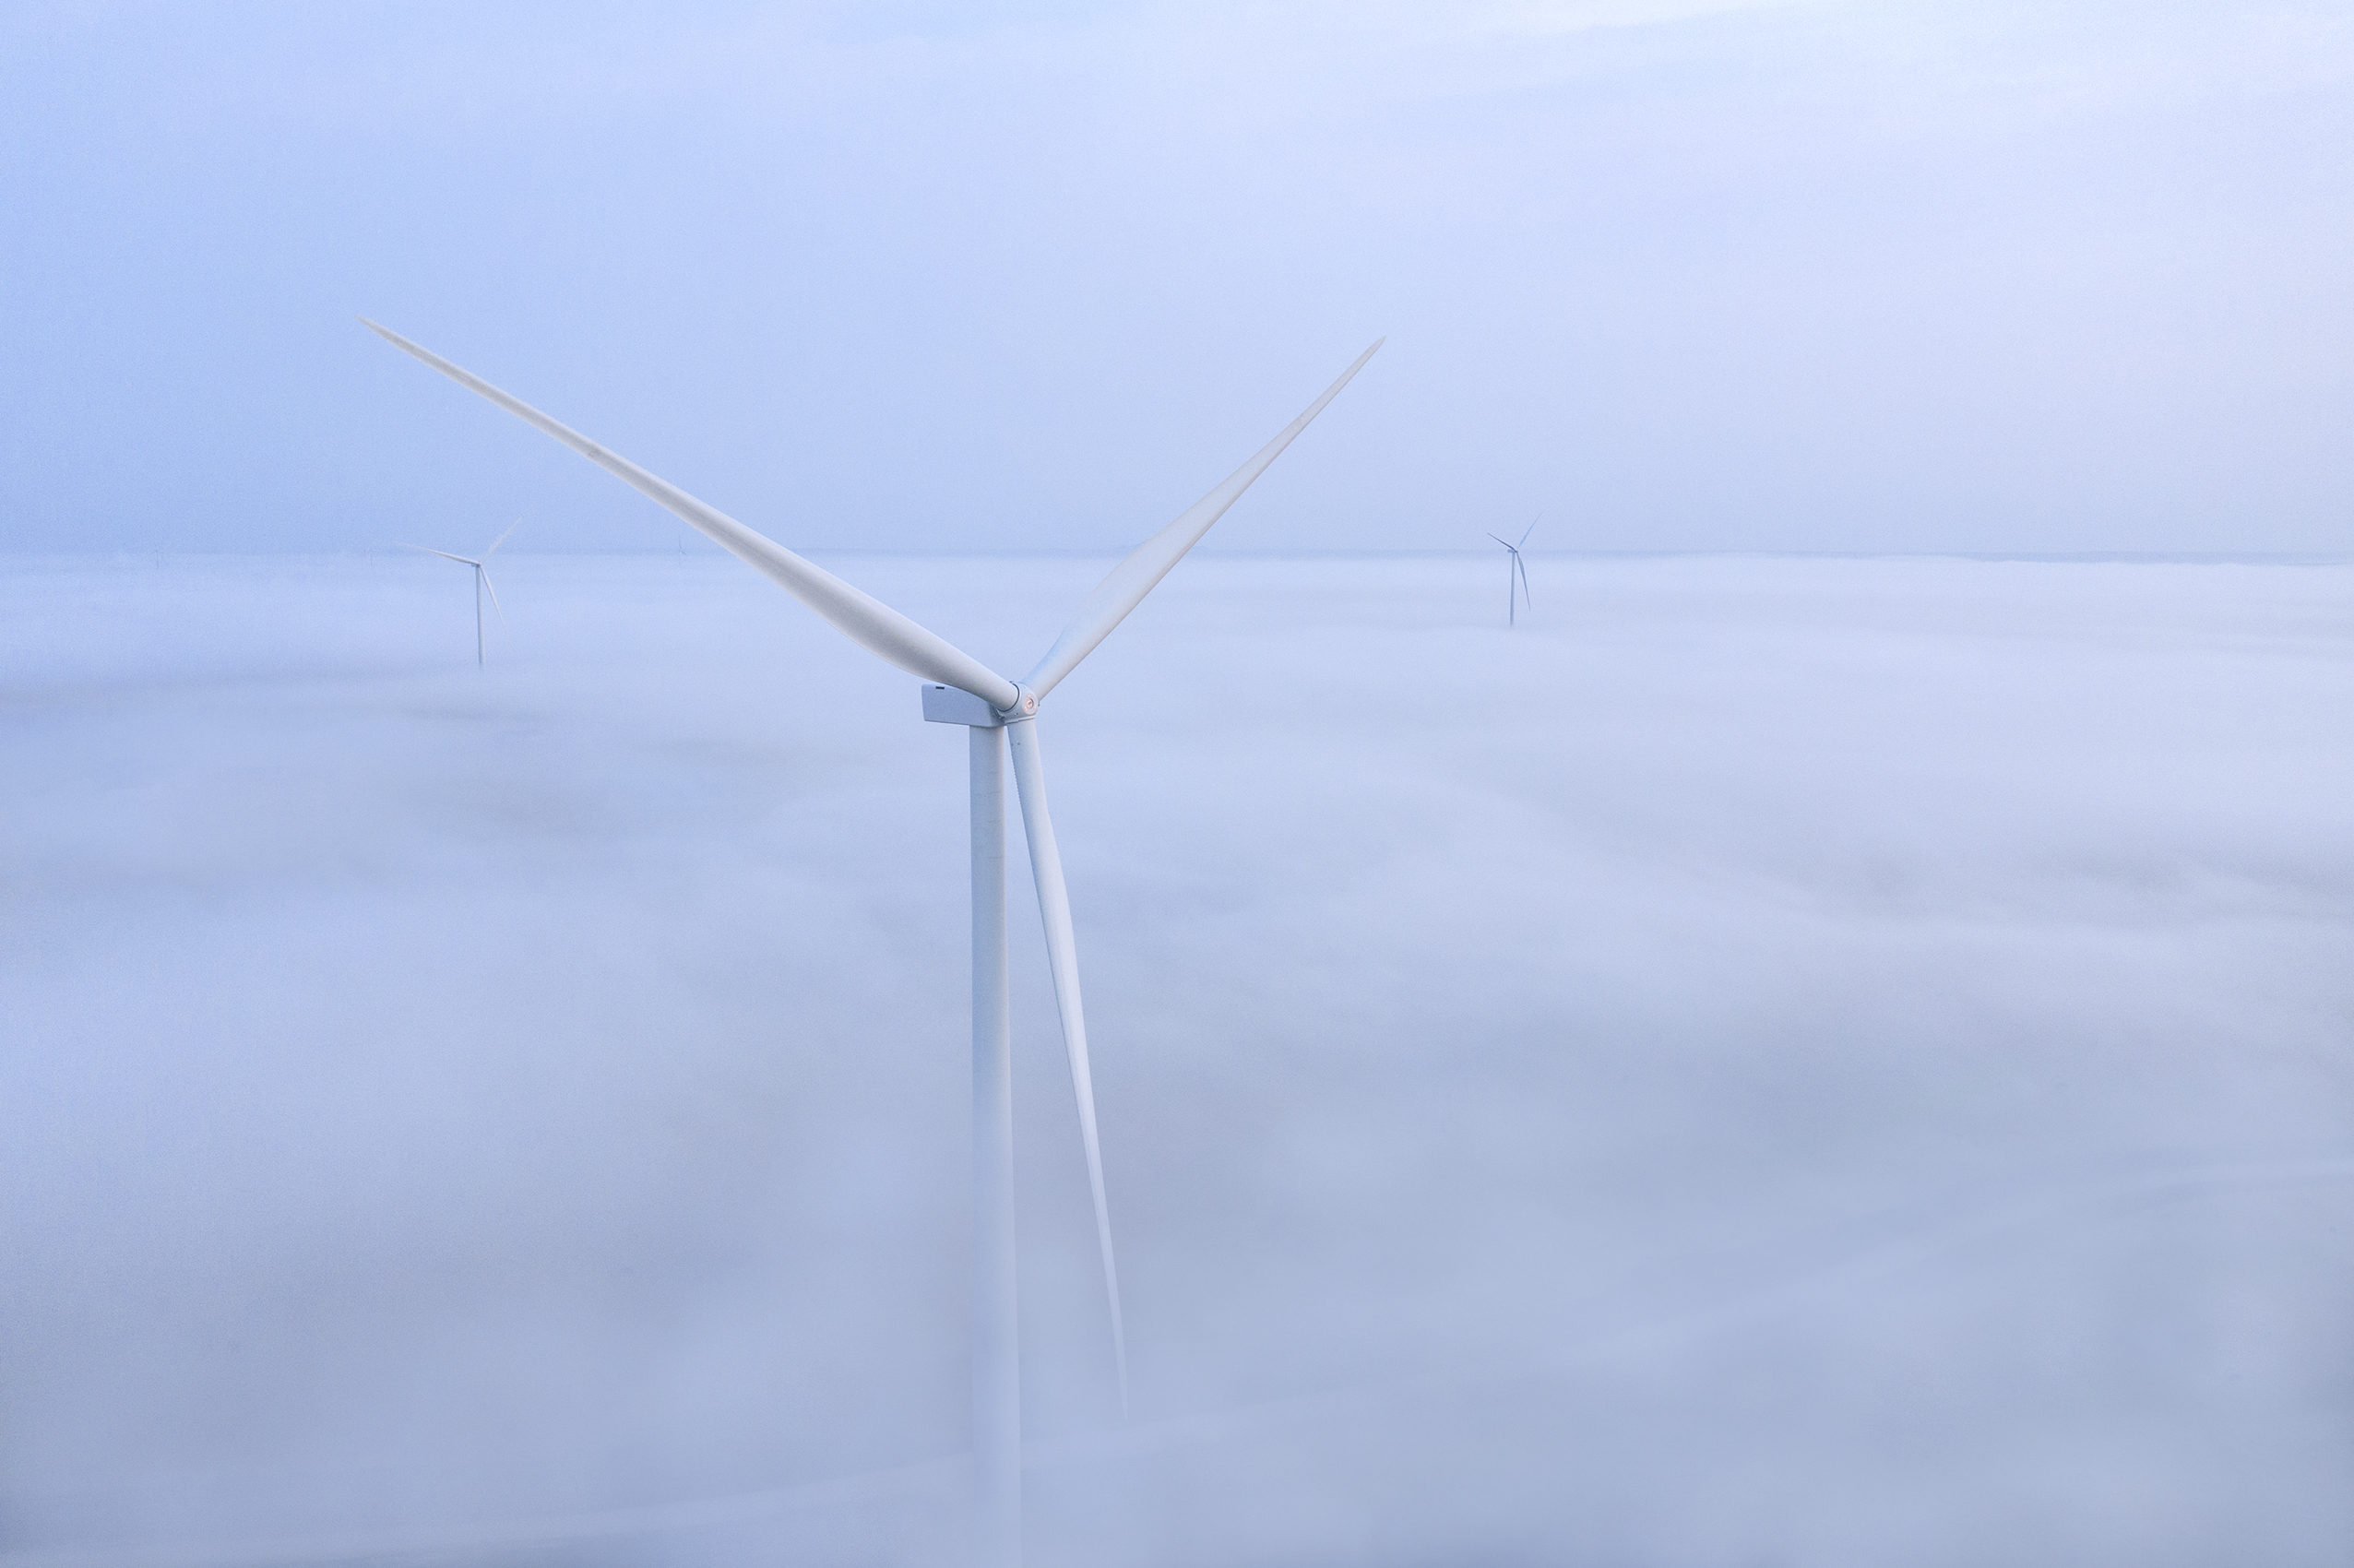 Wind turbine above fog and cloud layer on large wind farm.